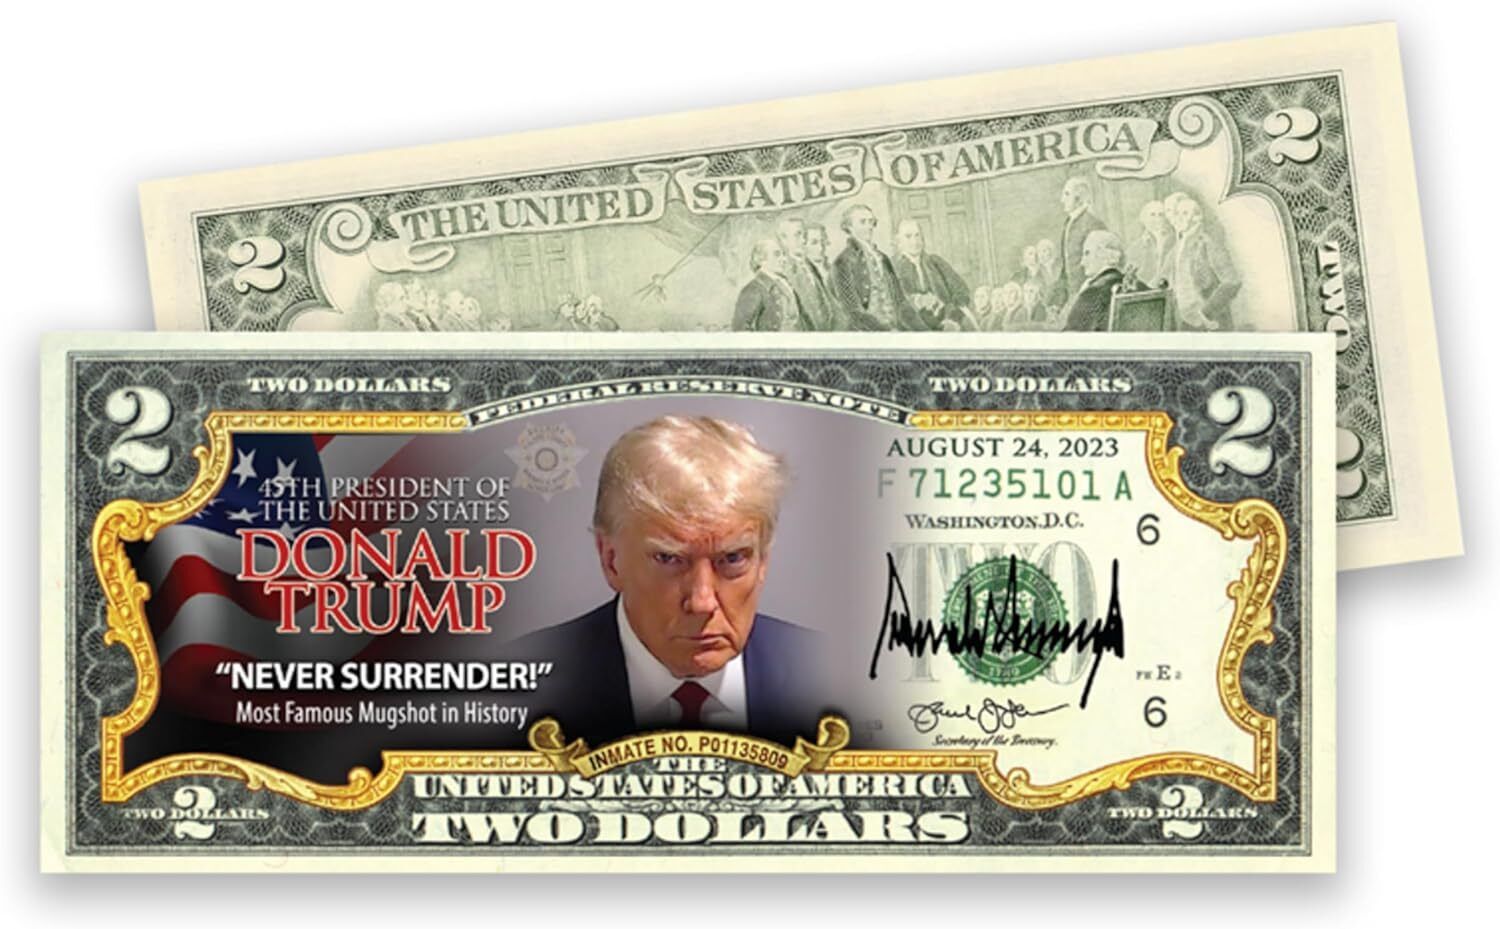 Trump Never Surrender Colorized Mugshot $2 Bill Uncirculated